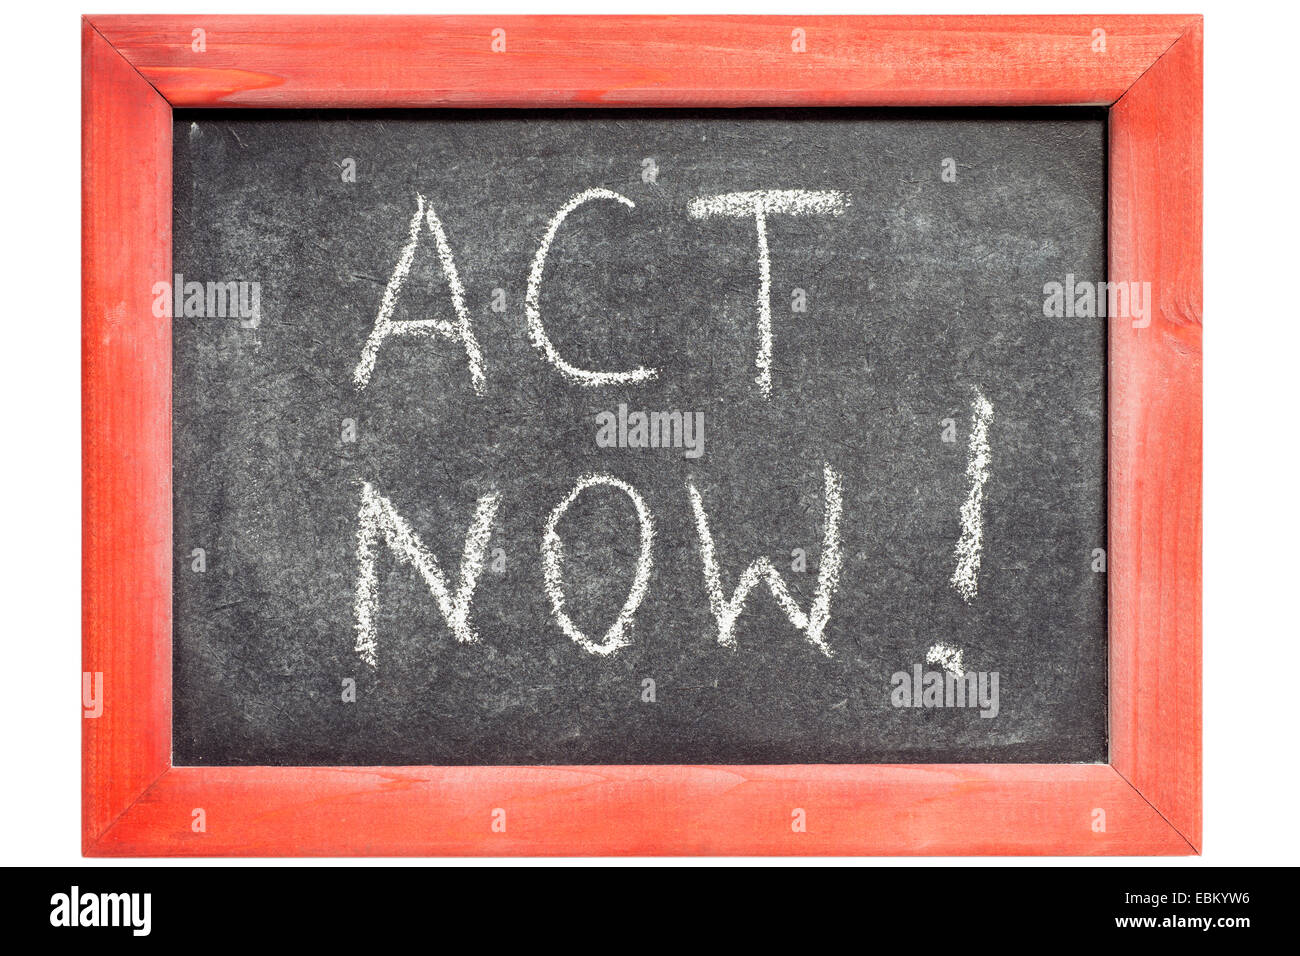 act now exclamation handwritten on vintage blackboard Stock Photo